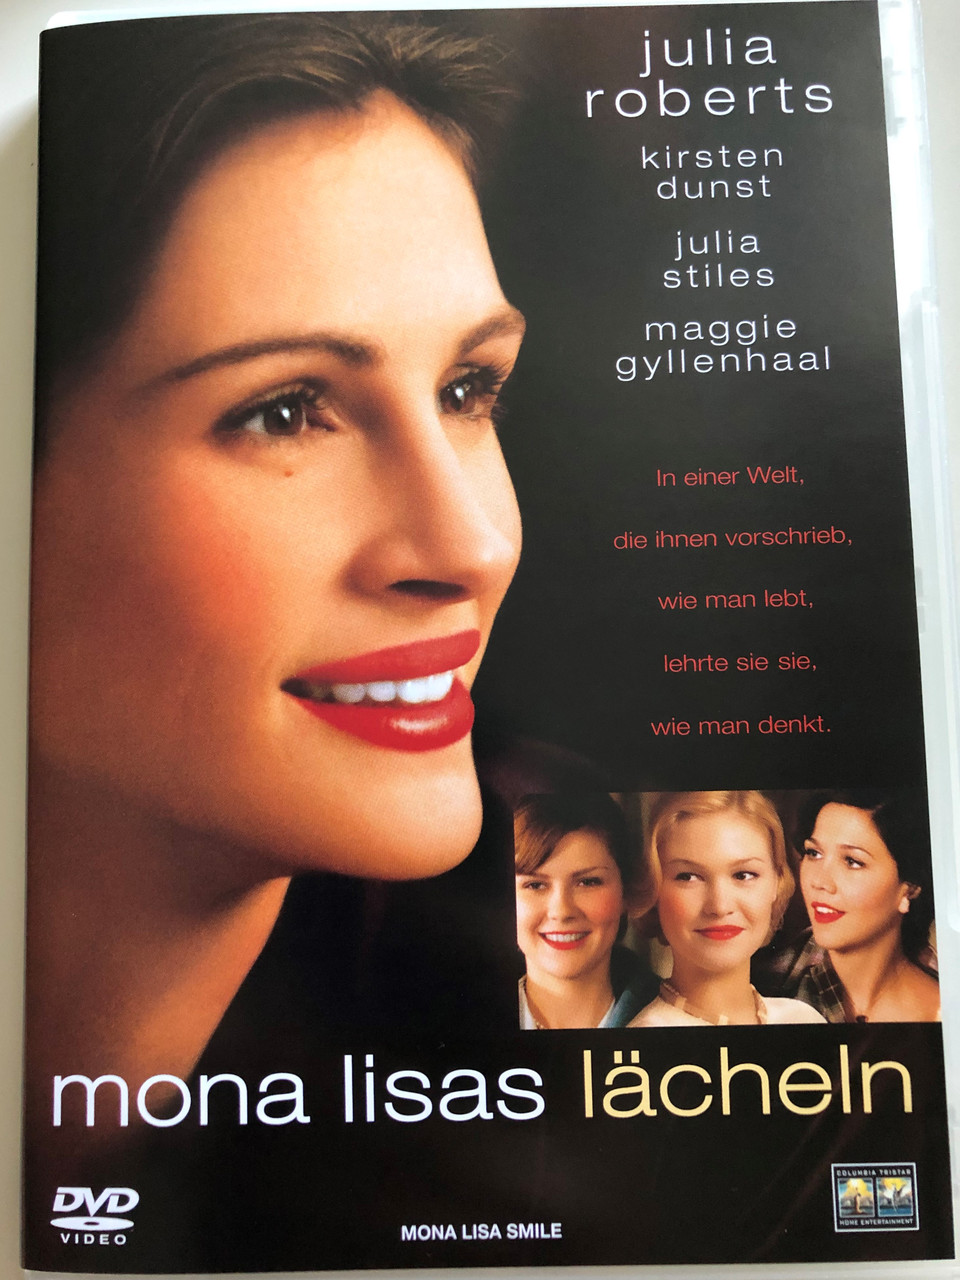 Mona Lisa Smile DVD 2003 Mona Lisas Lächeln / Directed by Mike Newell /  Starring: Julia Roberts, Kirsten Dunst, Julia Stiles, Maggie Gyllenhaal -  bibleinmylanguage